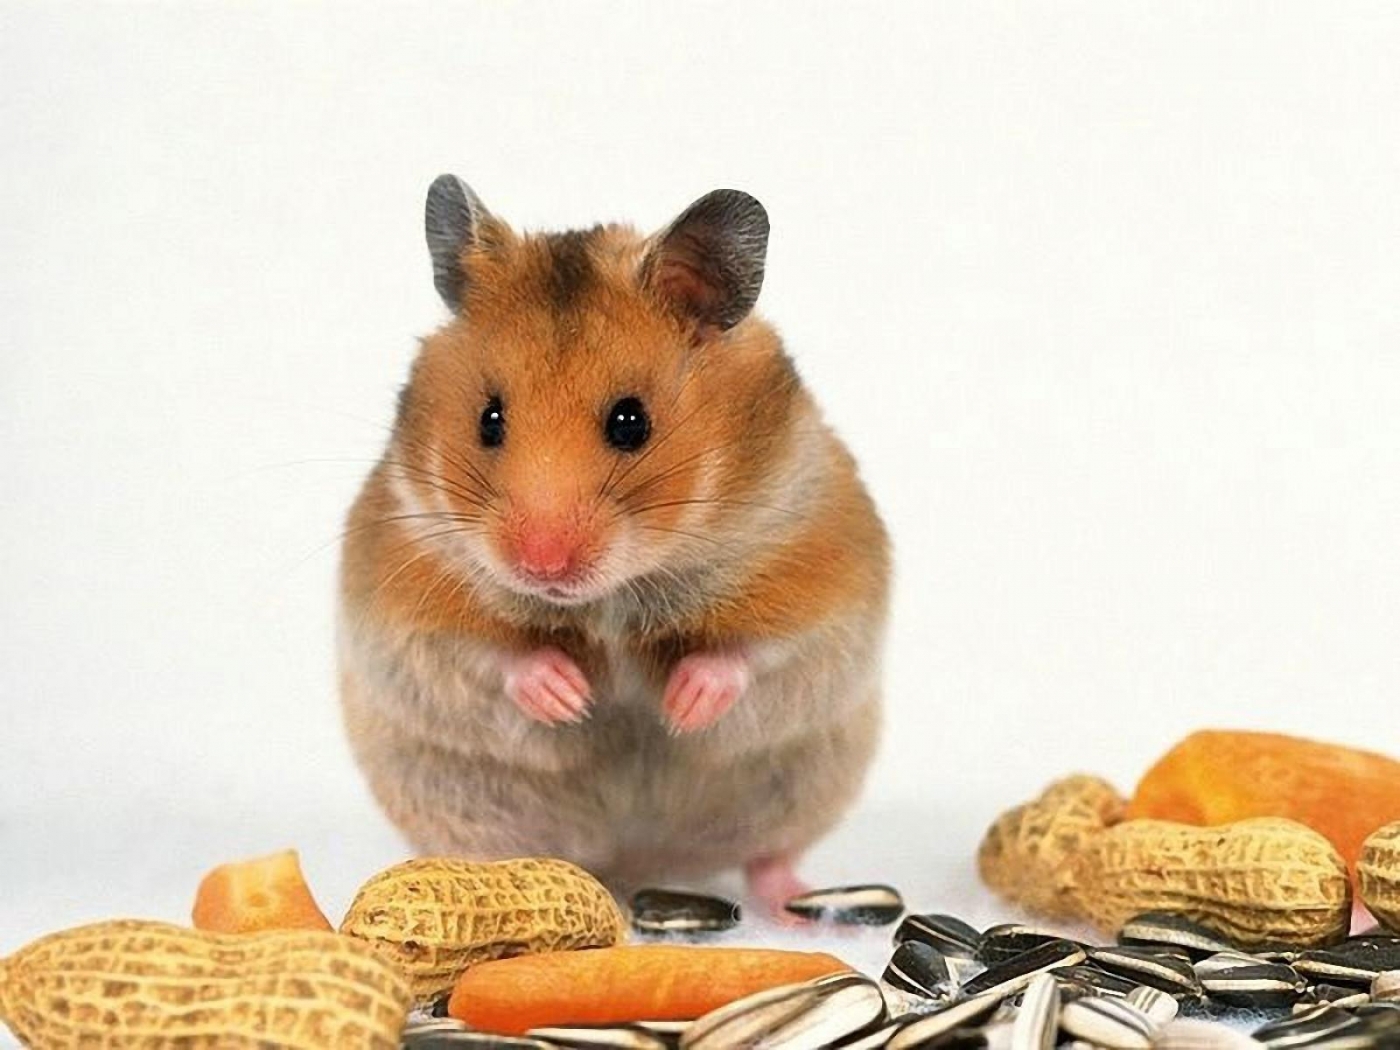 Handy-Wallpaper Tiere, Hamster kostenlos herunterladen.